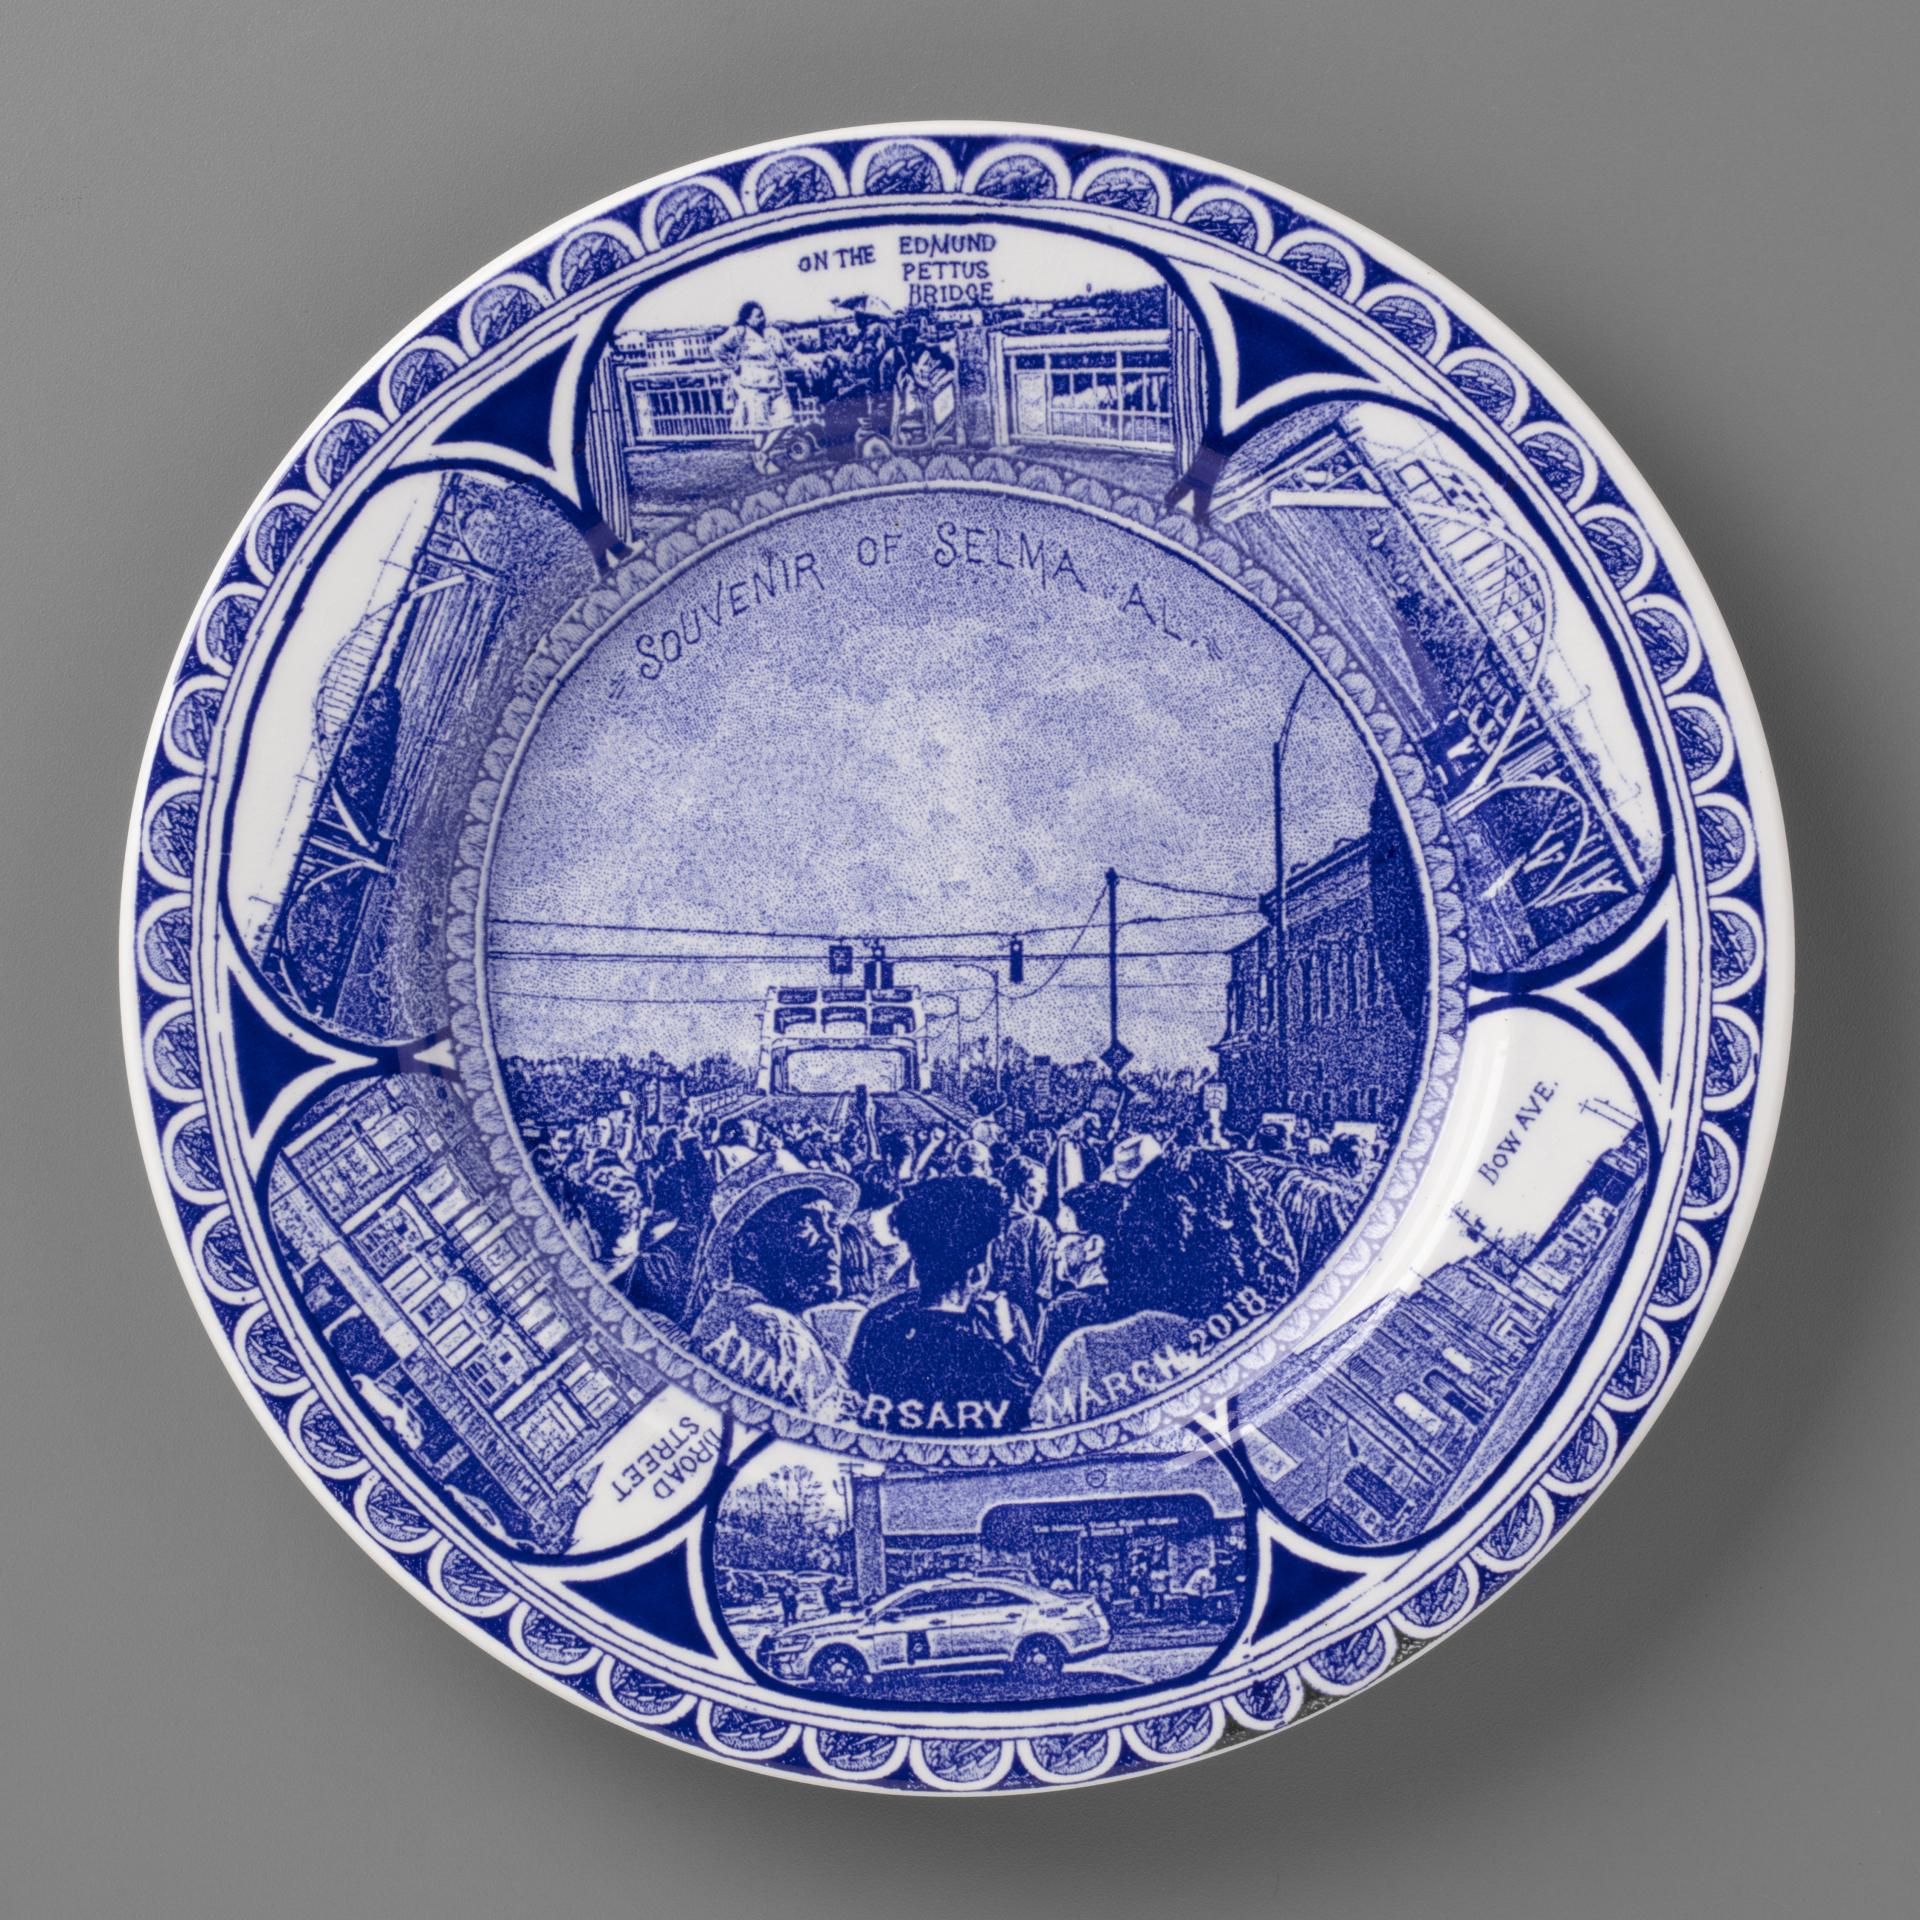 blue and white transferware plate depicting scenes of Selma, AL, featuring a march across the Edmund Pettus Bridge